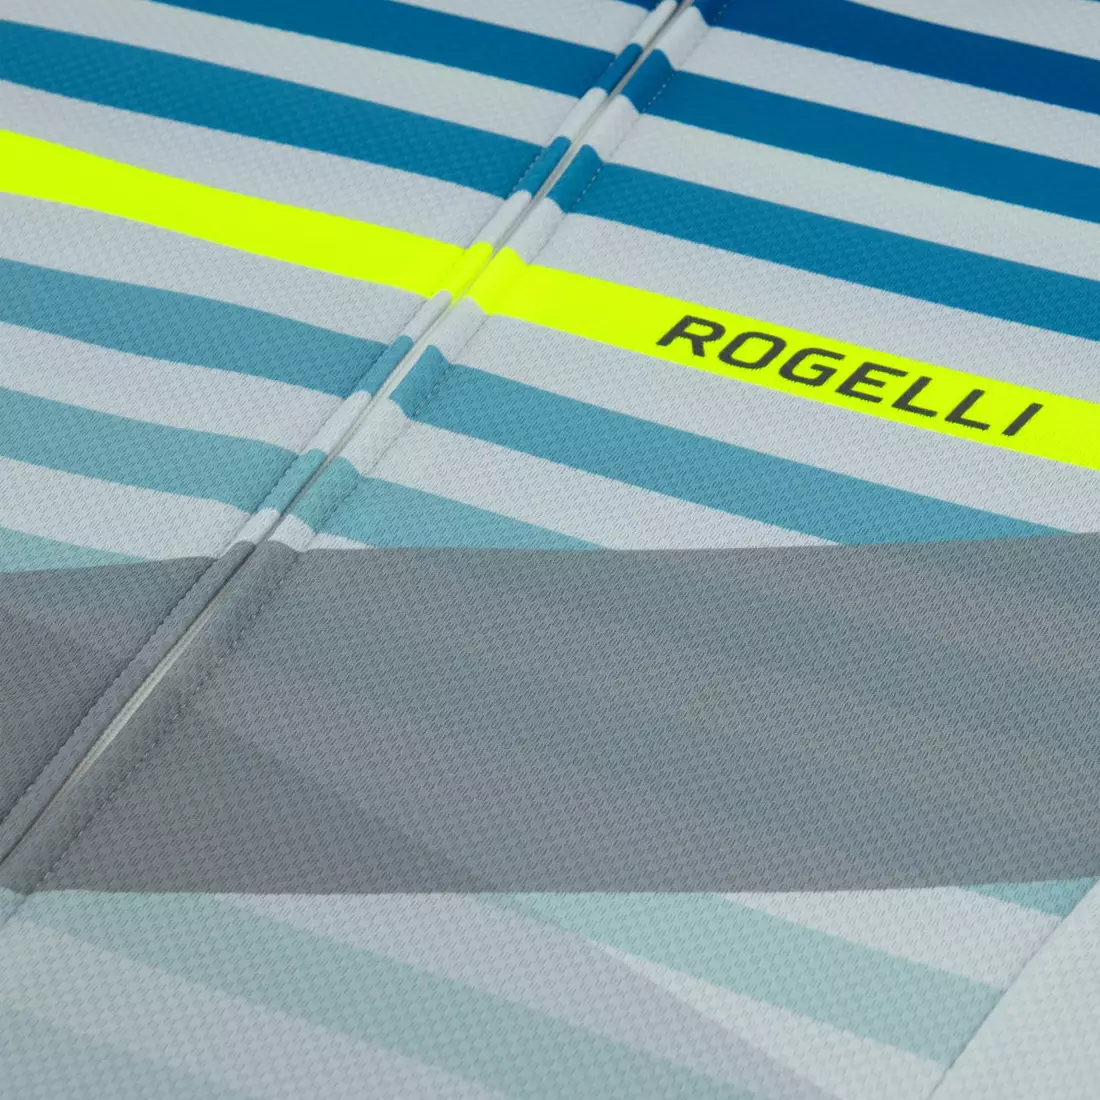 ROGELLI koszulka rowerowa męska STRIPE grey/green 001.101